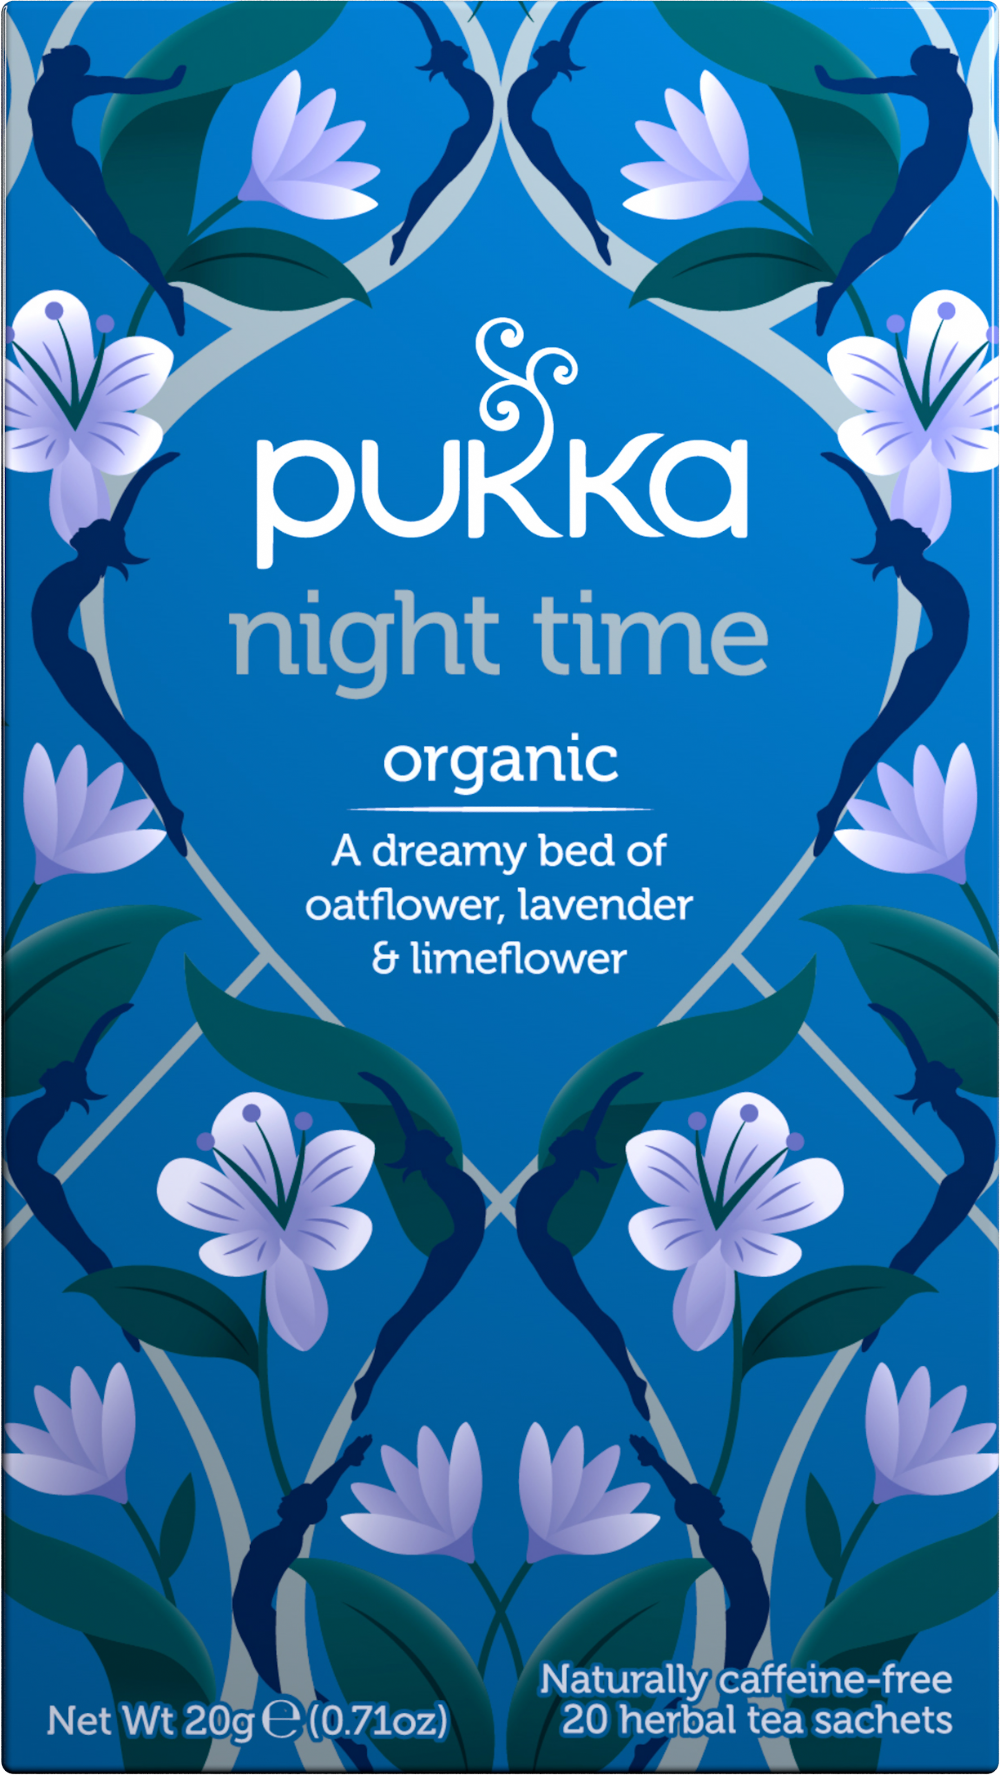 Pukka 20 Night Time Teabags 20G - The Food Balance